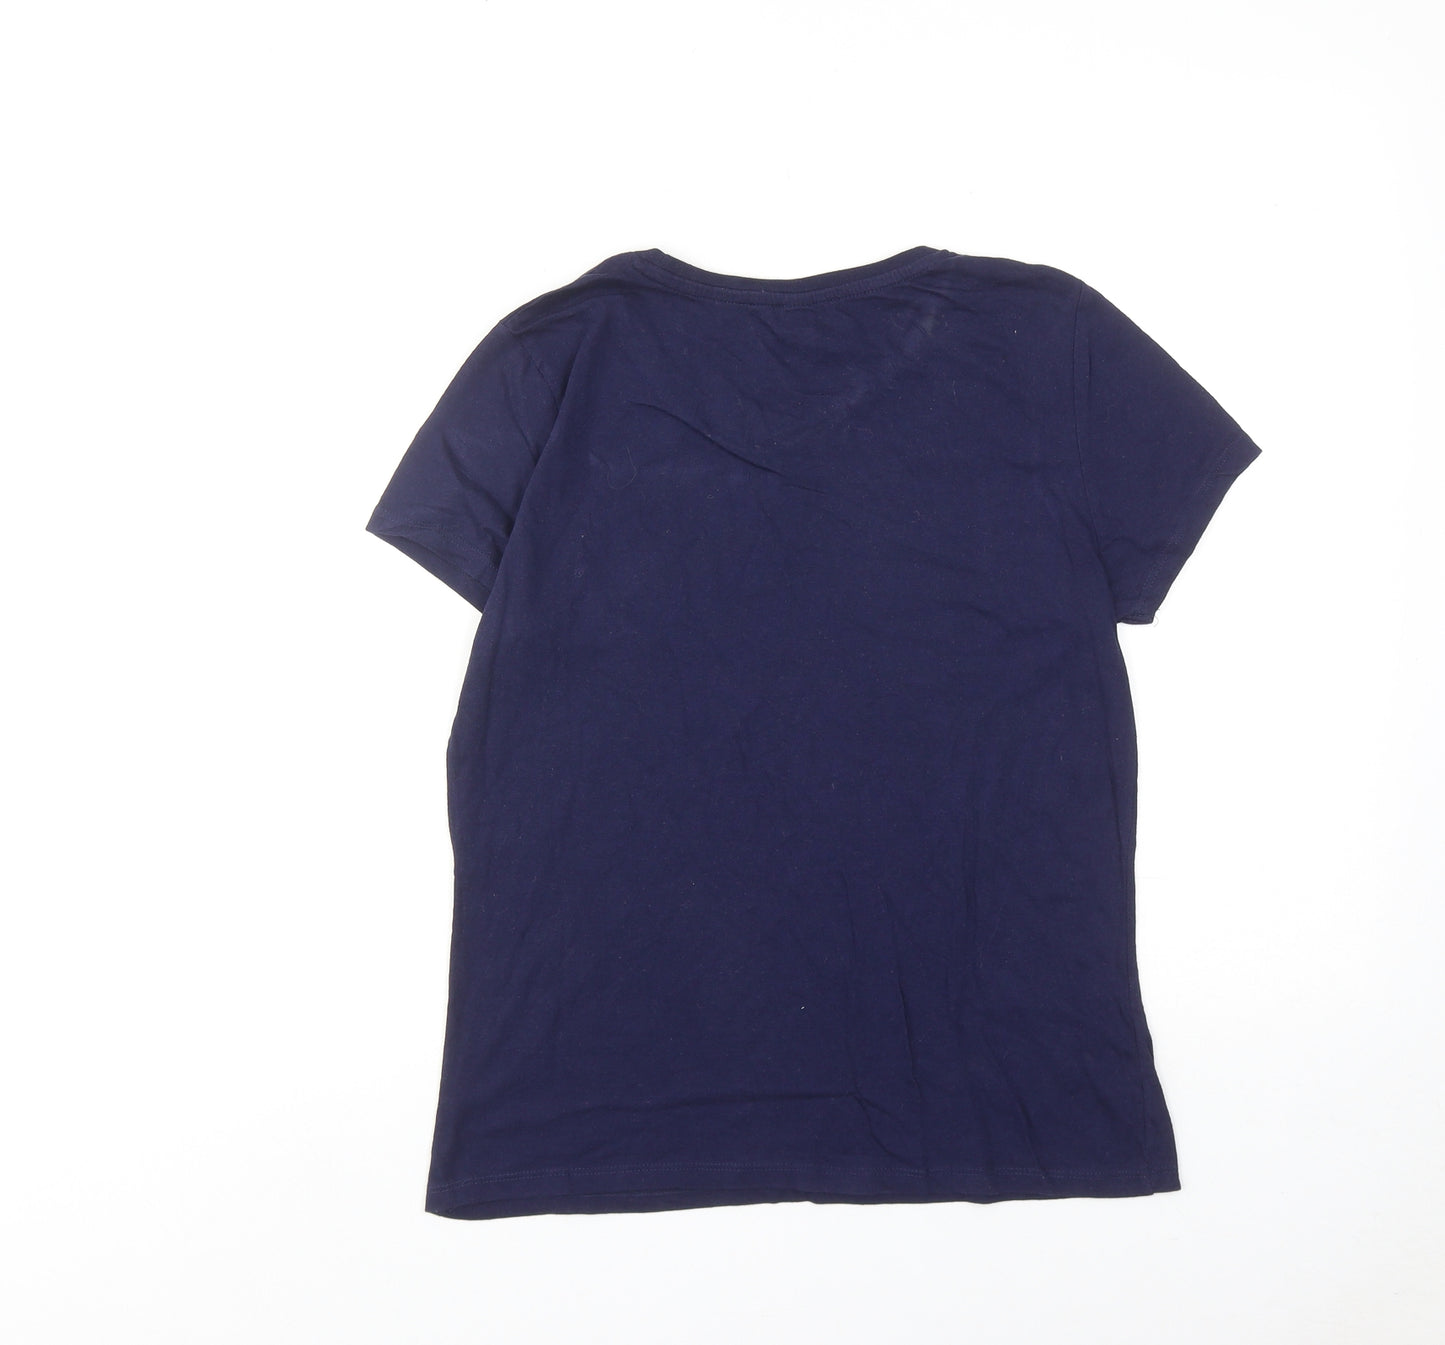 B&C Womens Blue Cotton Basic T-Shirt Size S Round Neck - Bird Print